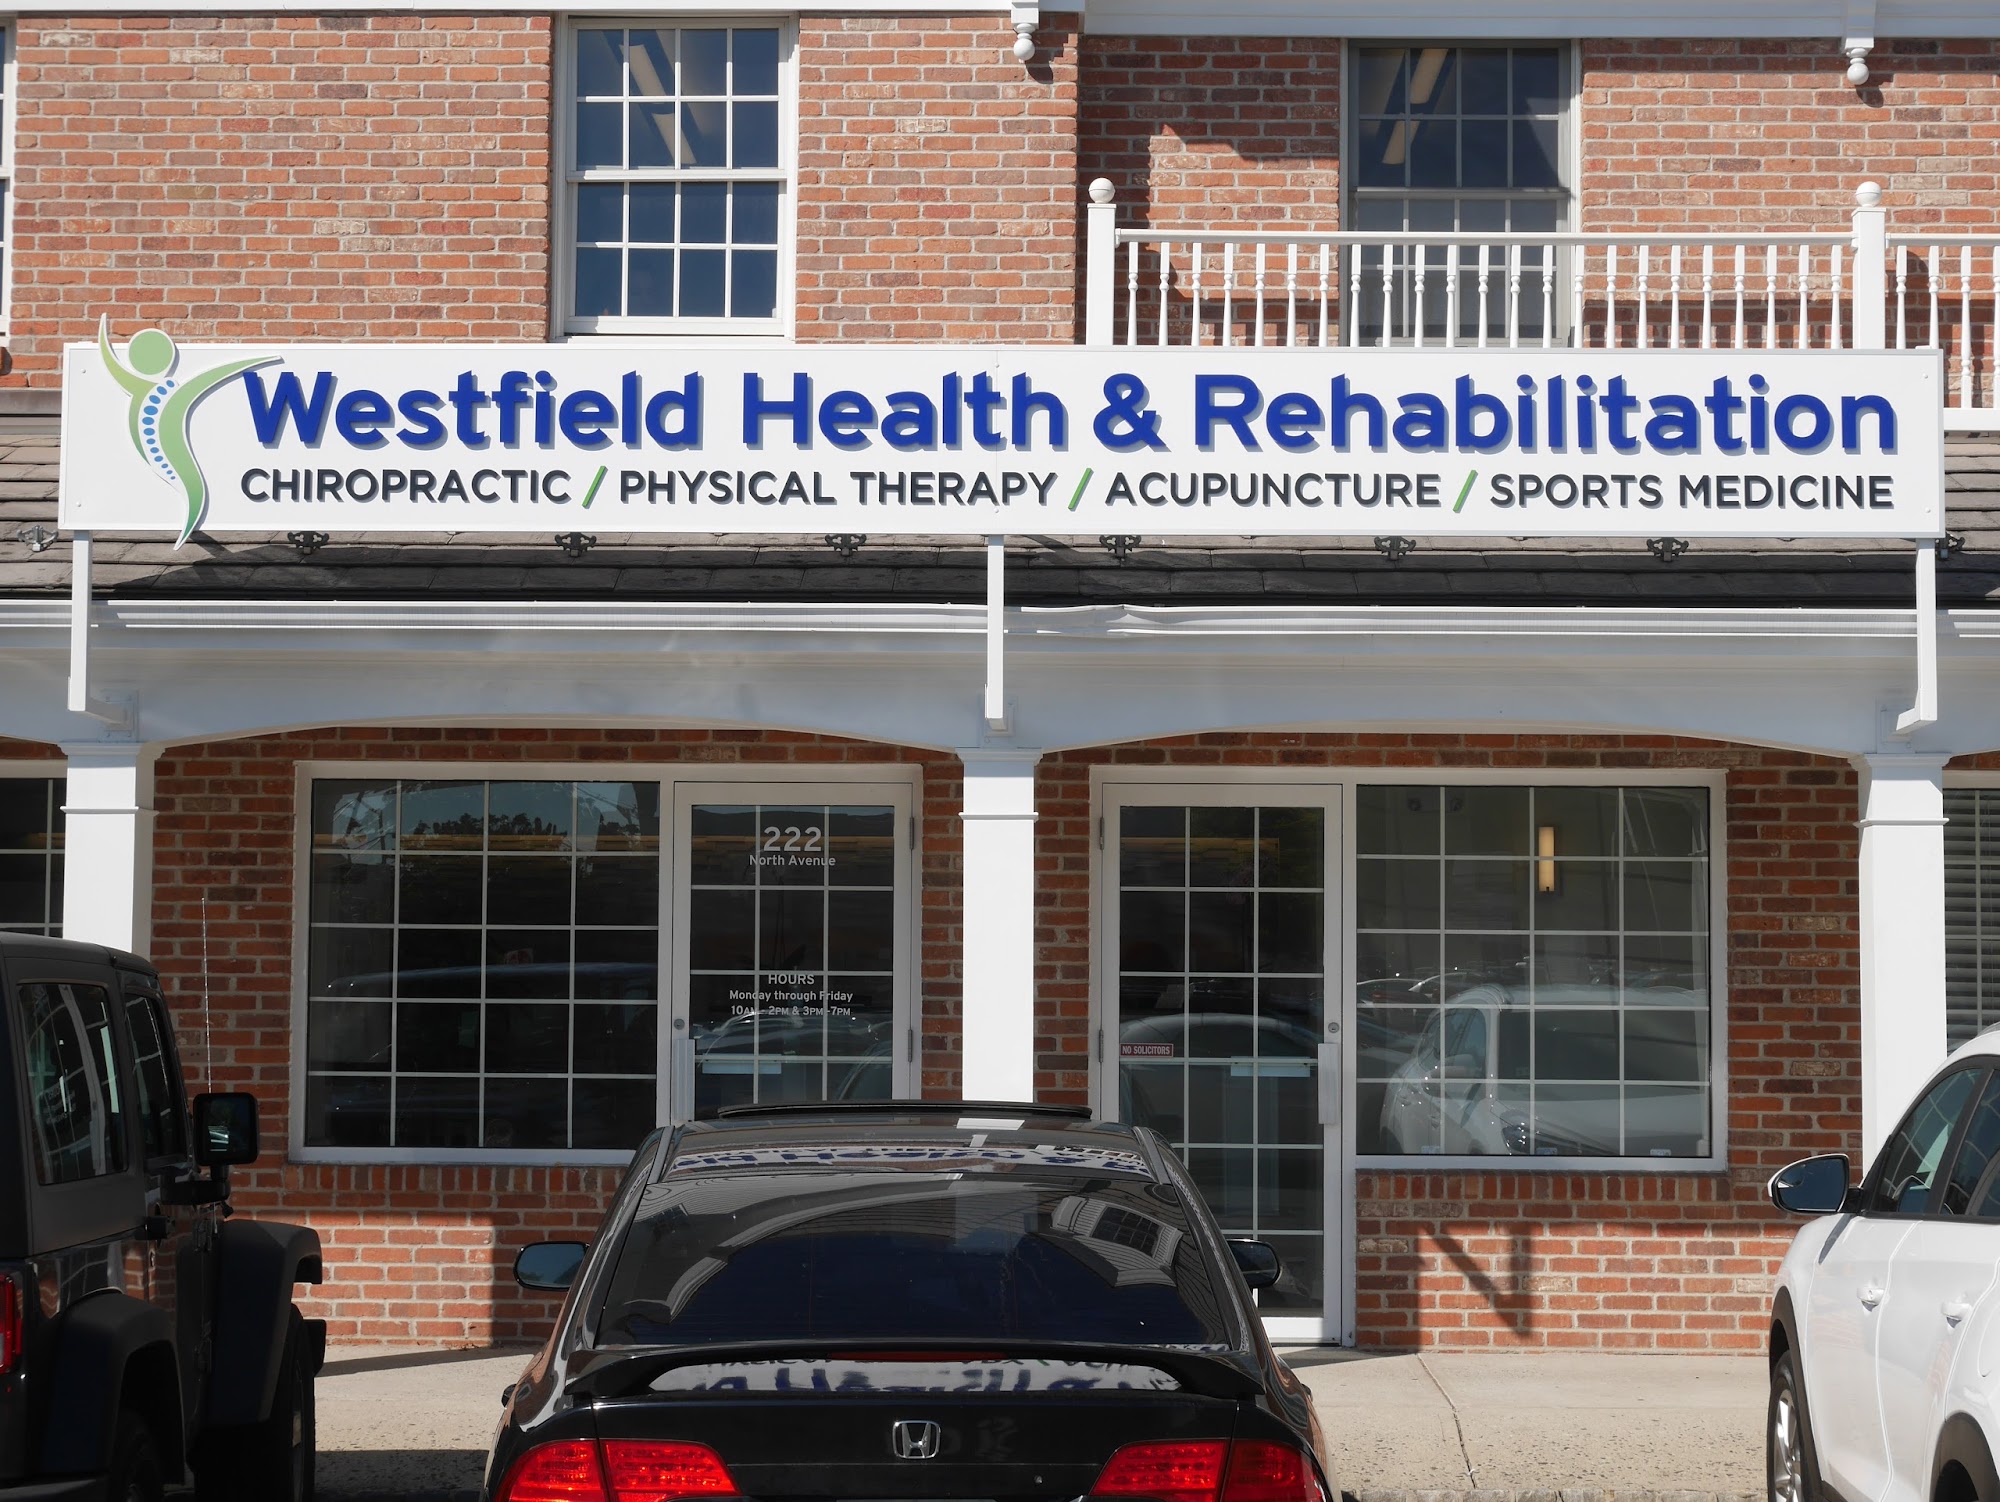 Westfield Health & Rehabilitation